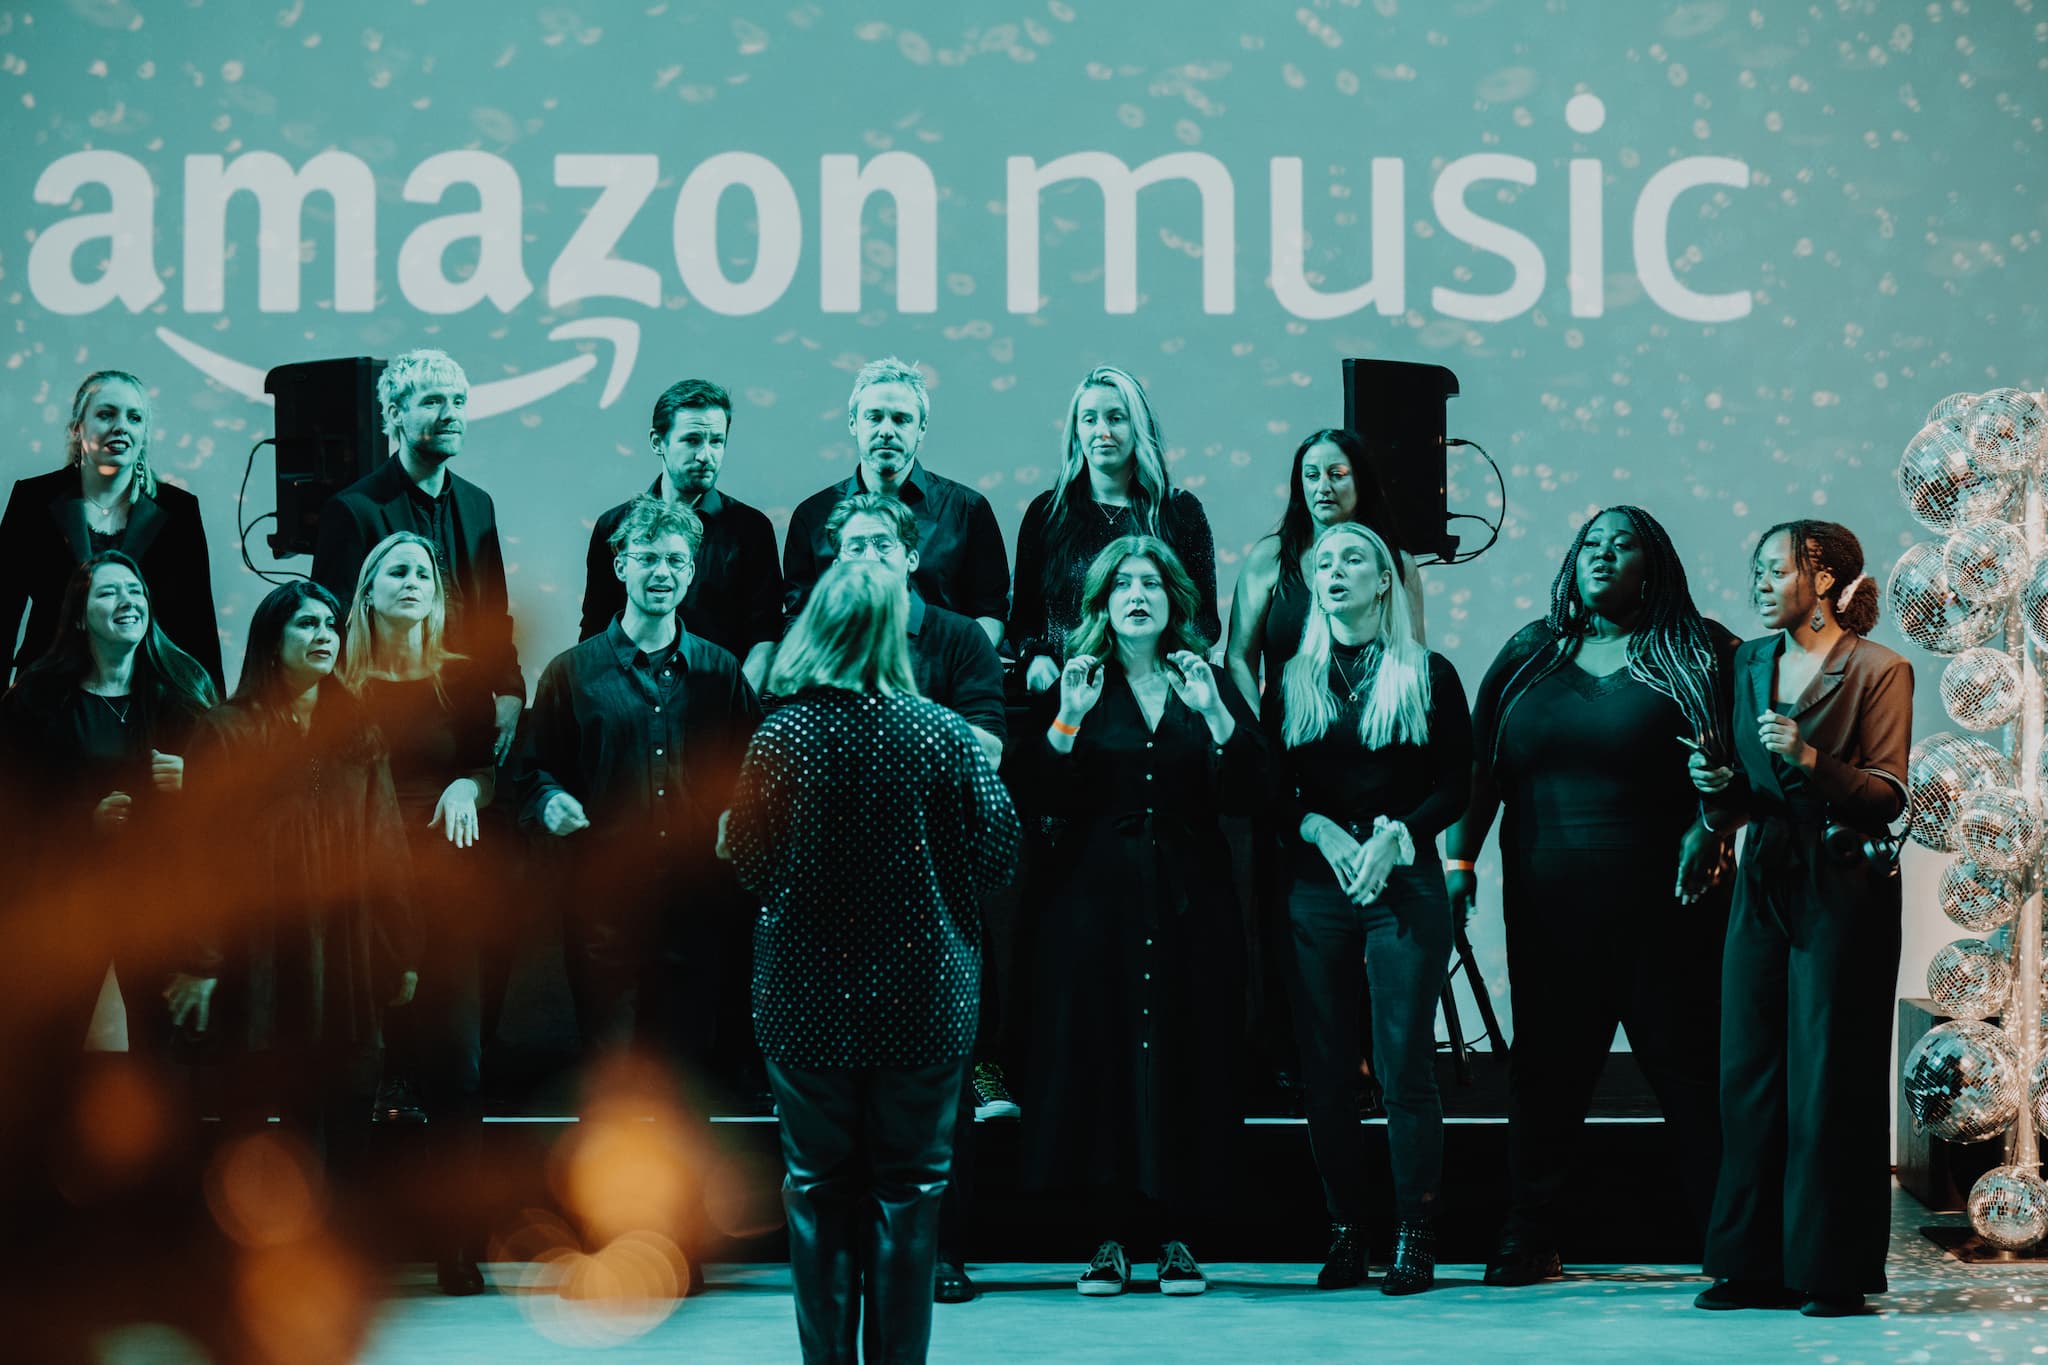 Amazon Music 2